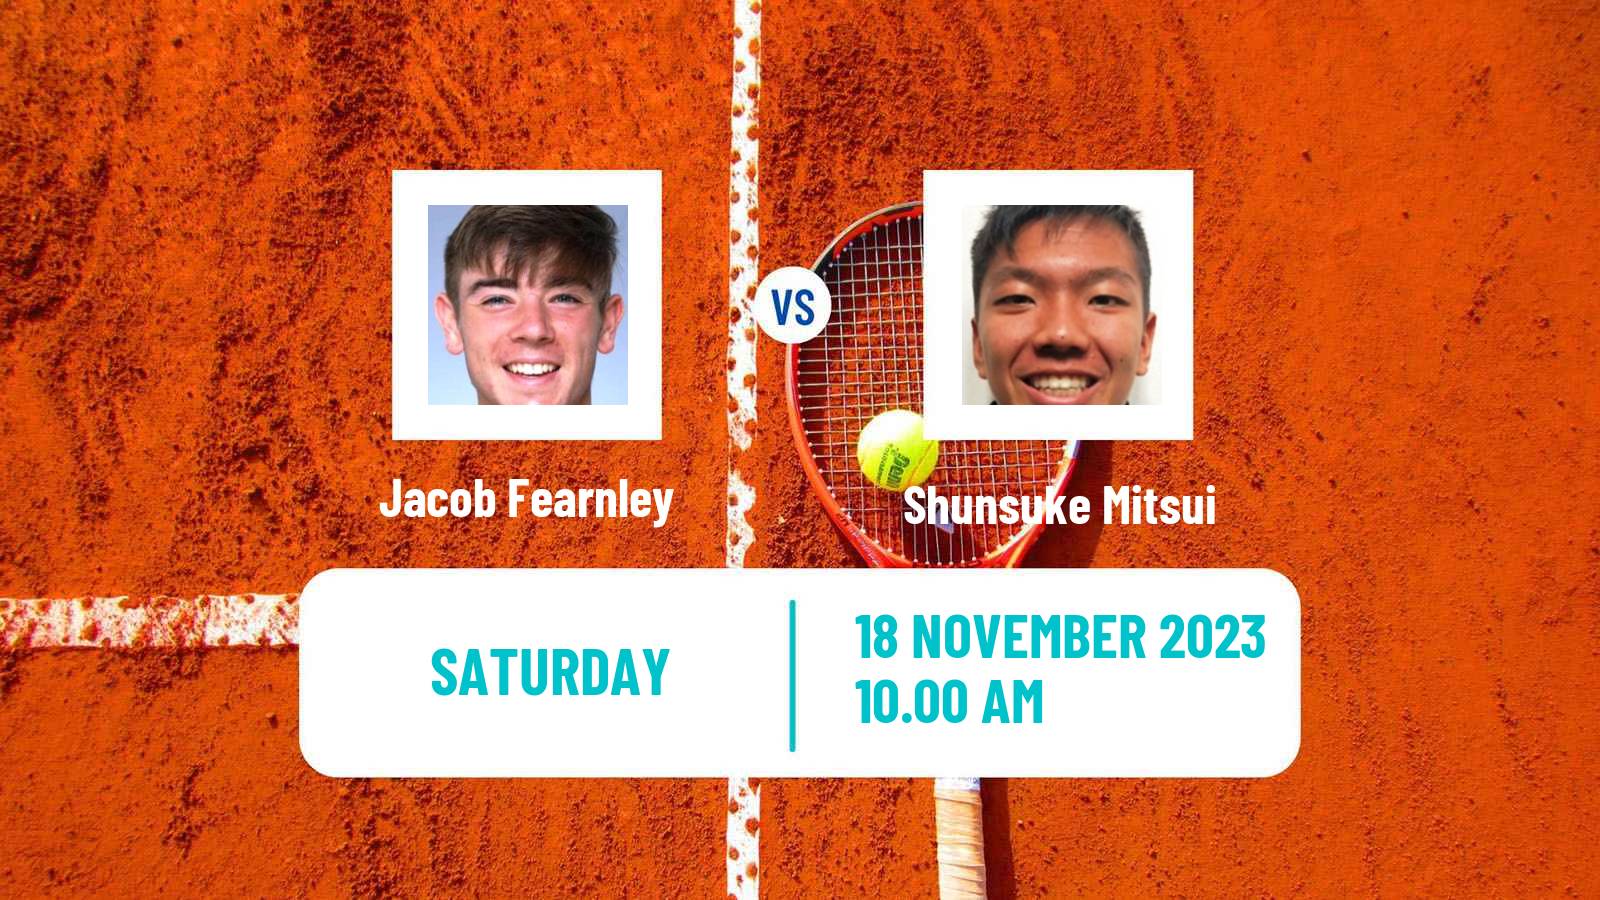 Tennis ITF M25 Columbus Oh Men Jacob Fearnley - Shunsuke Mitsui